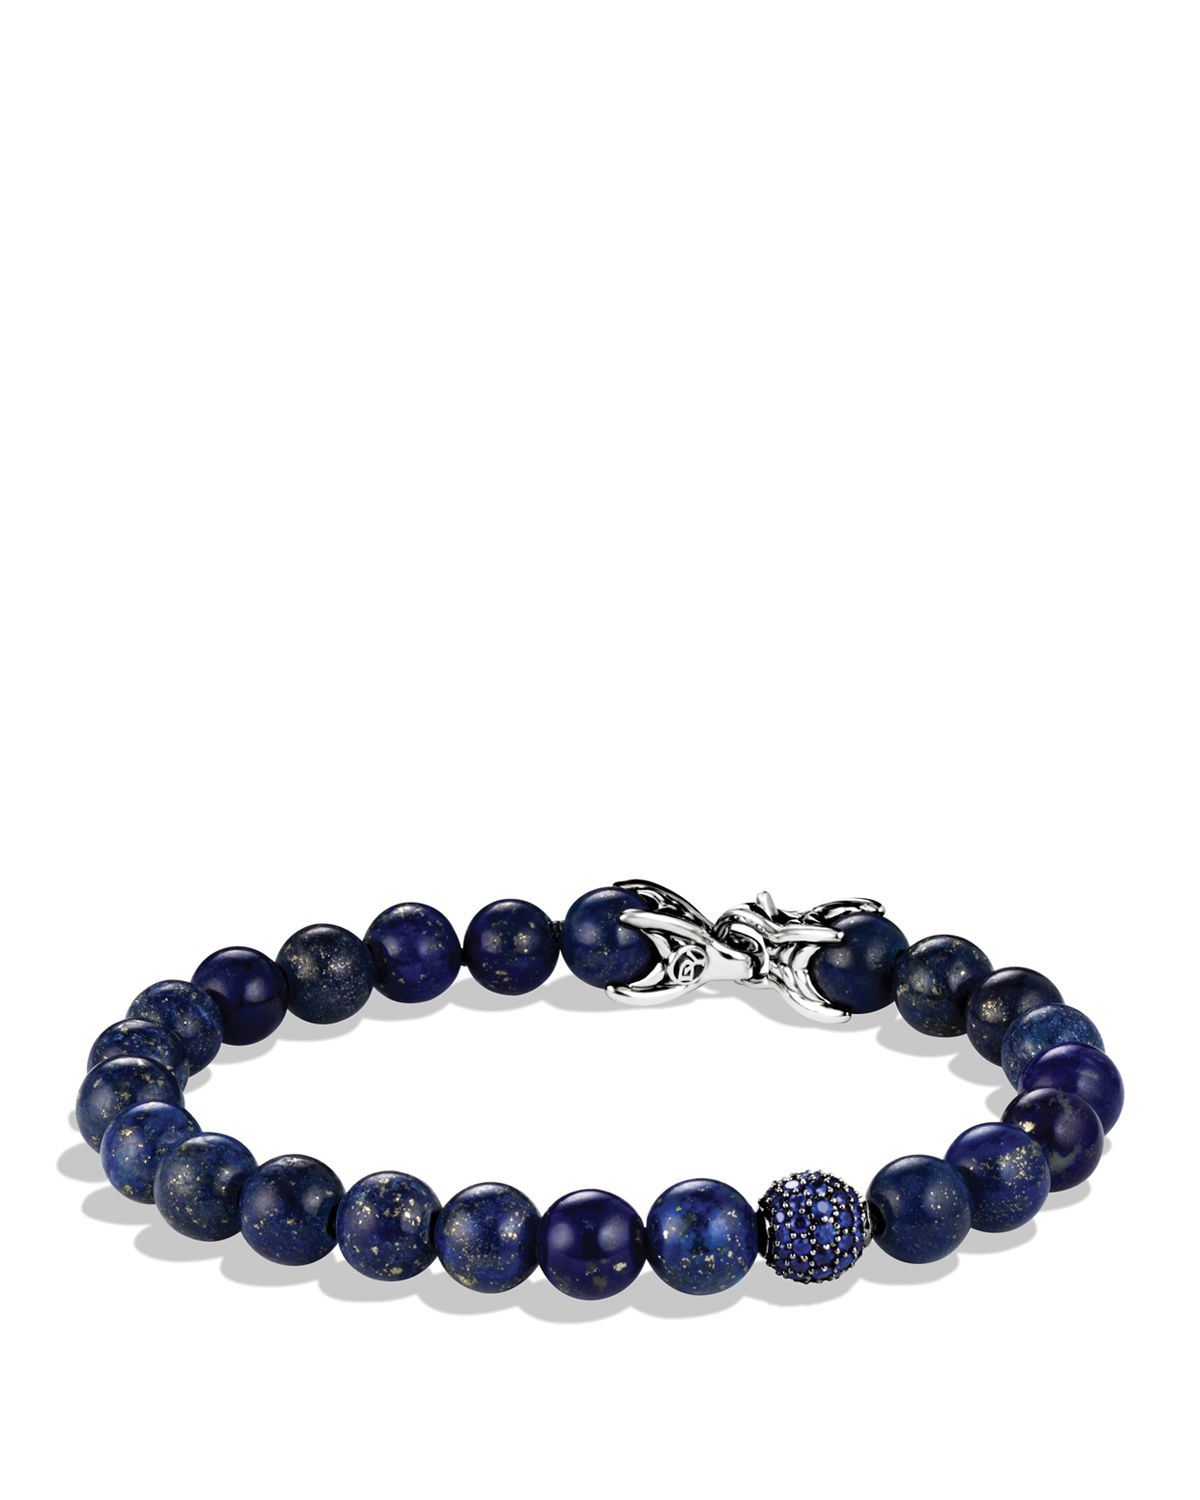 Lyst - David Yurman Spiritual Beads Bracelet With Lapis Lazuli ...